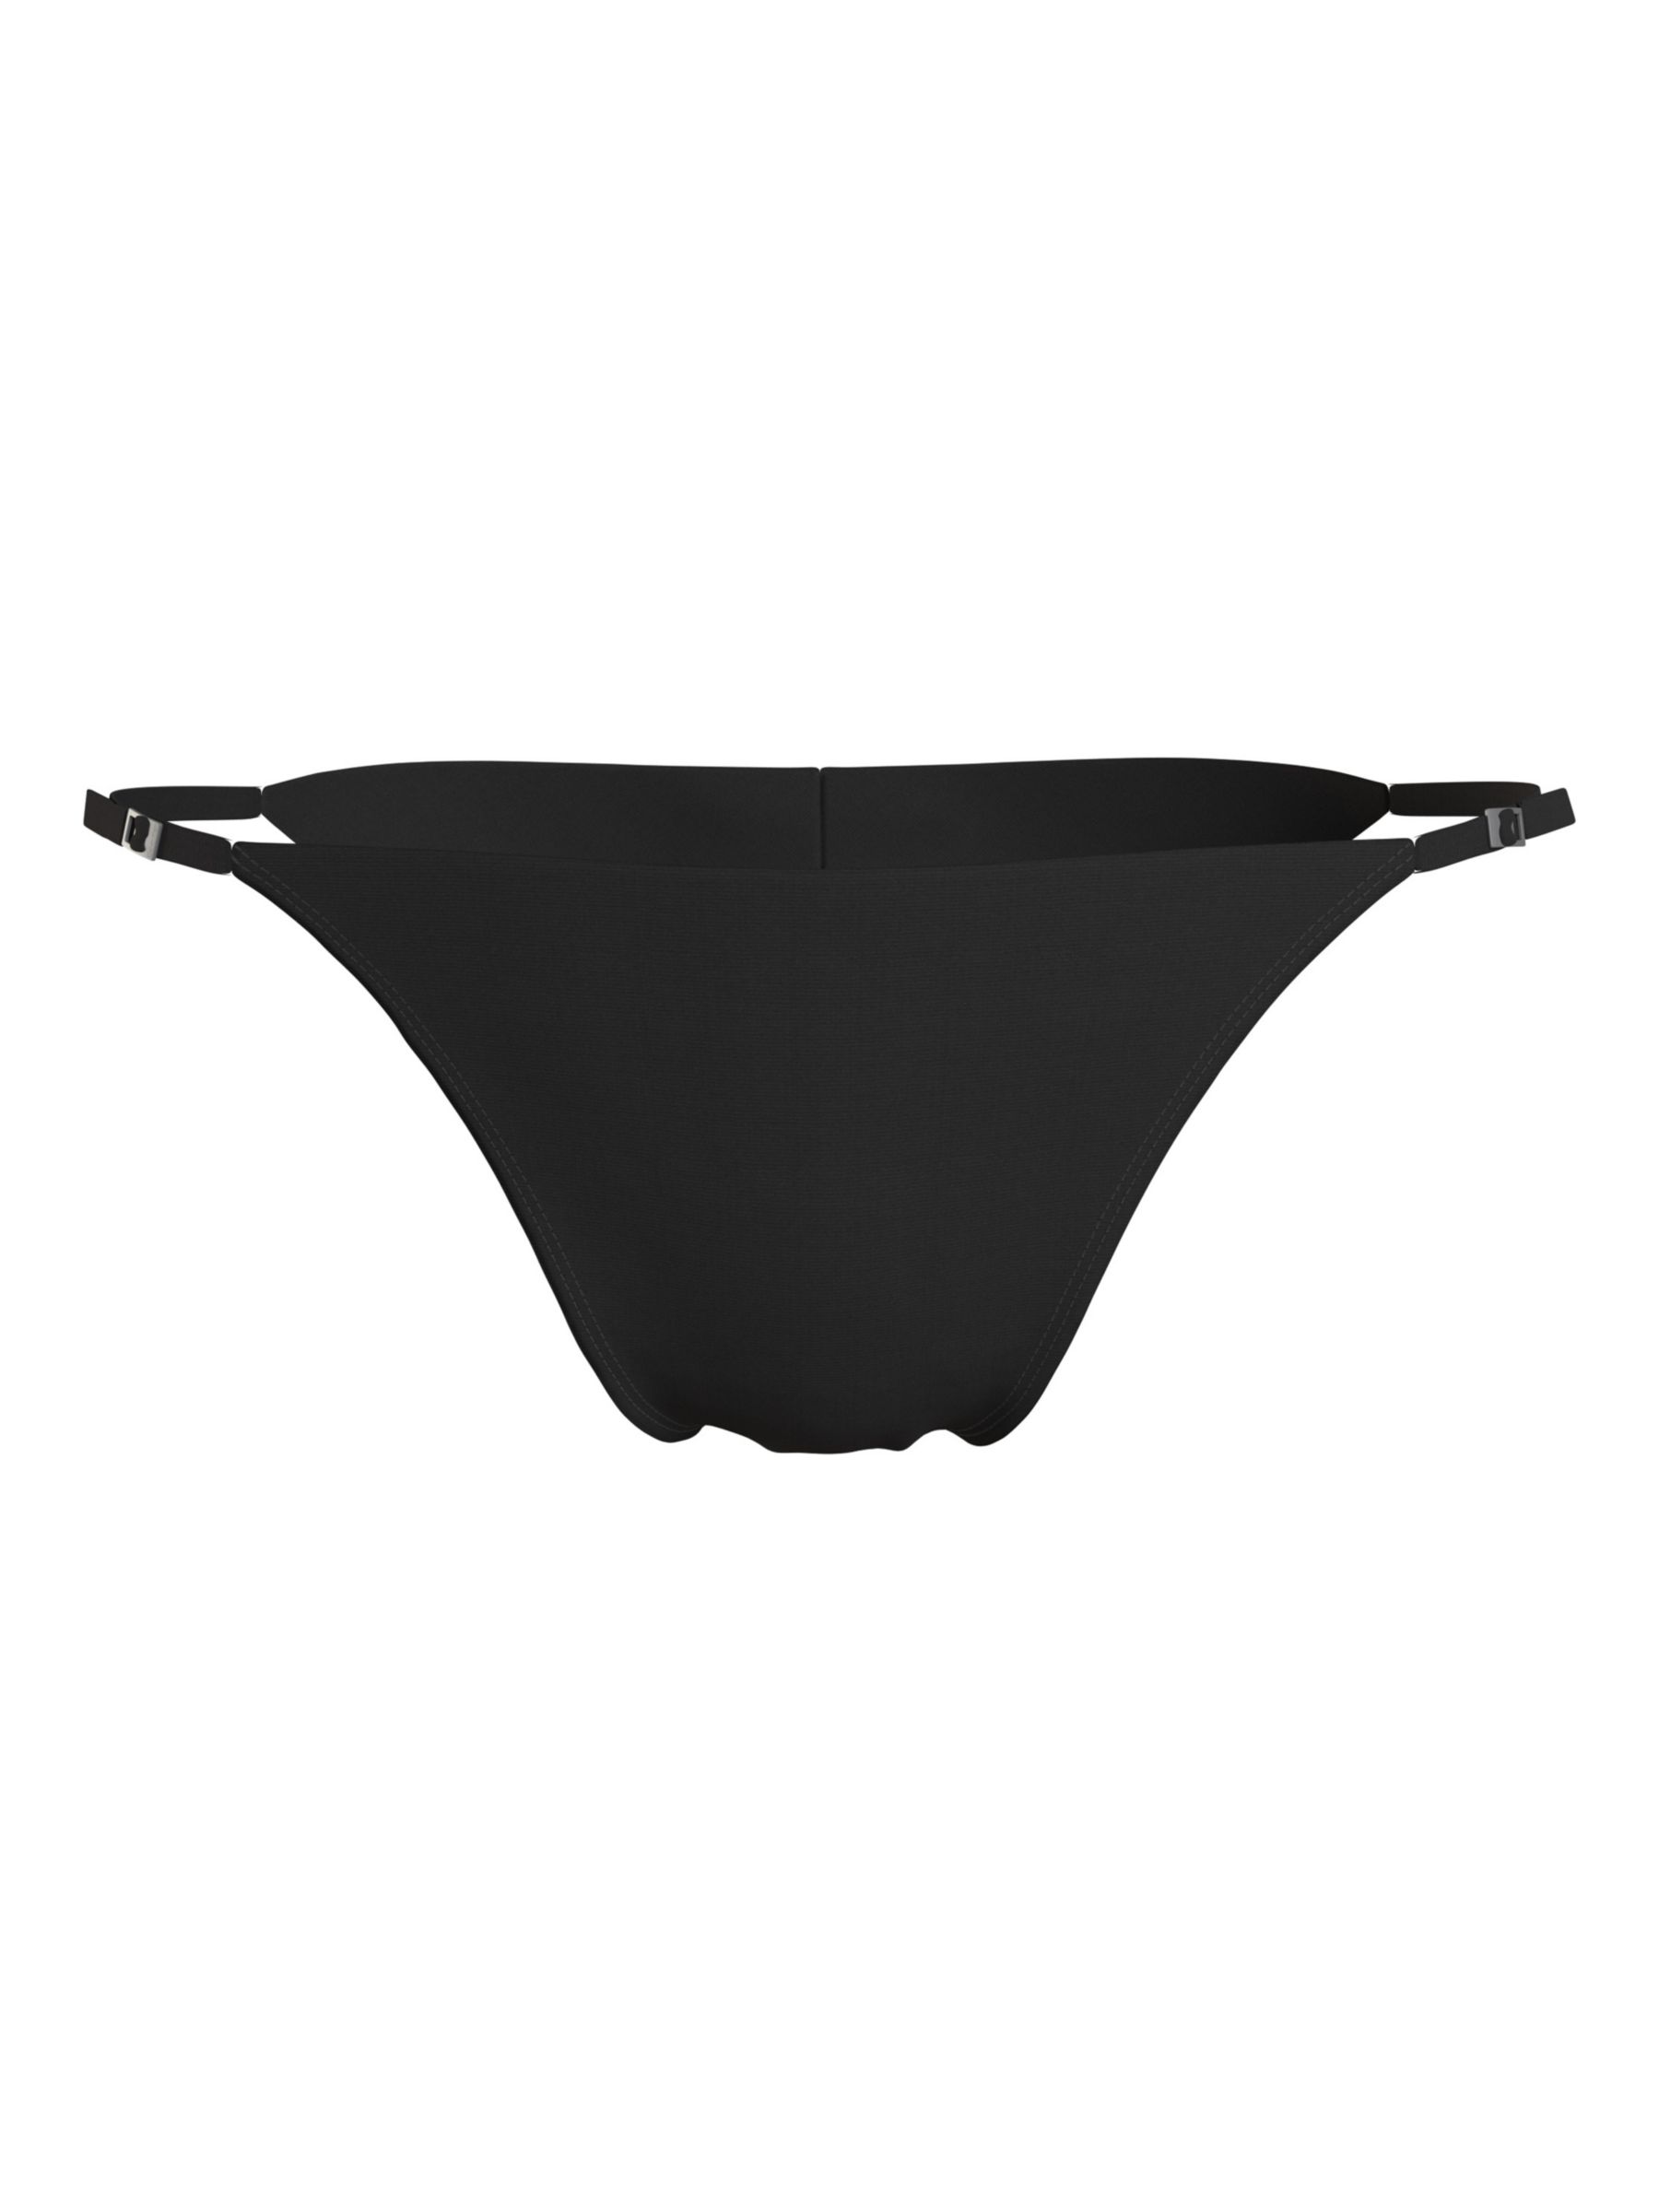 Calvin Klein Buckle Side Bikini Bottoms, Black, L